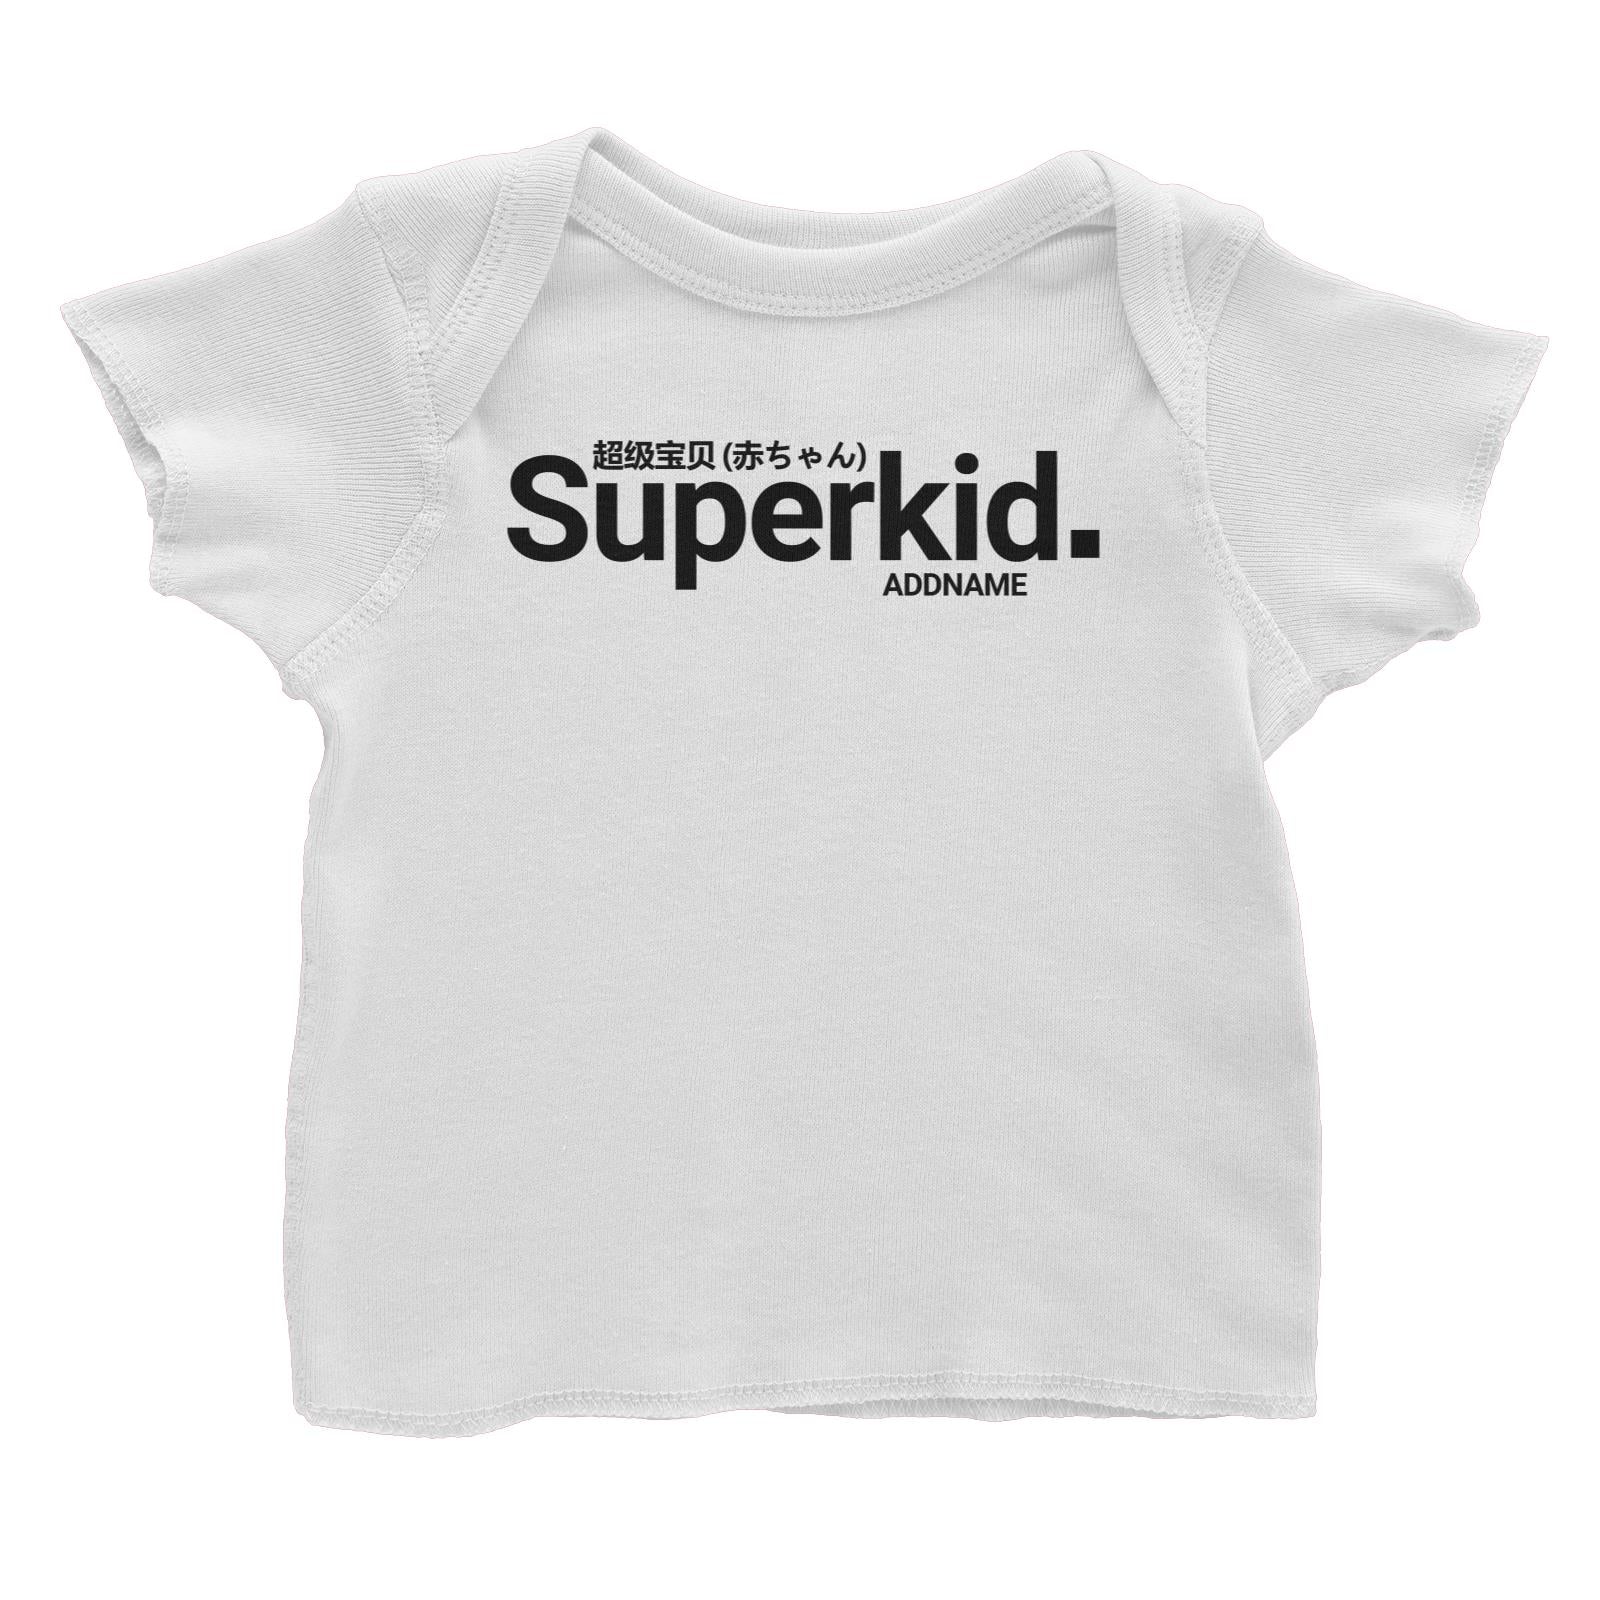 Streetwear Superkid Addname Baby T-Shirt